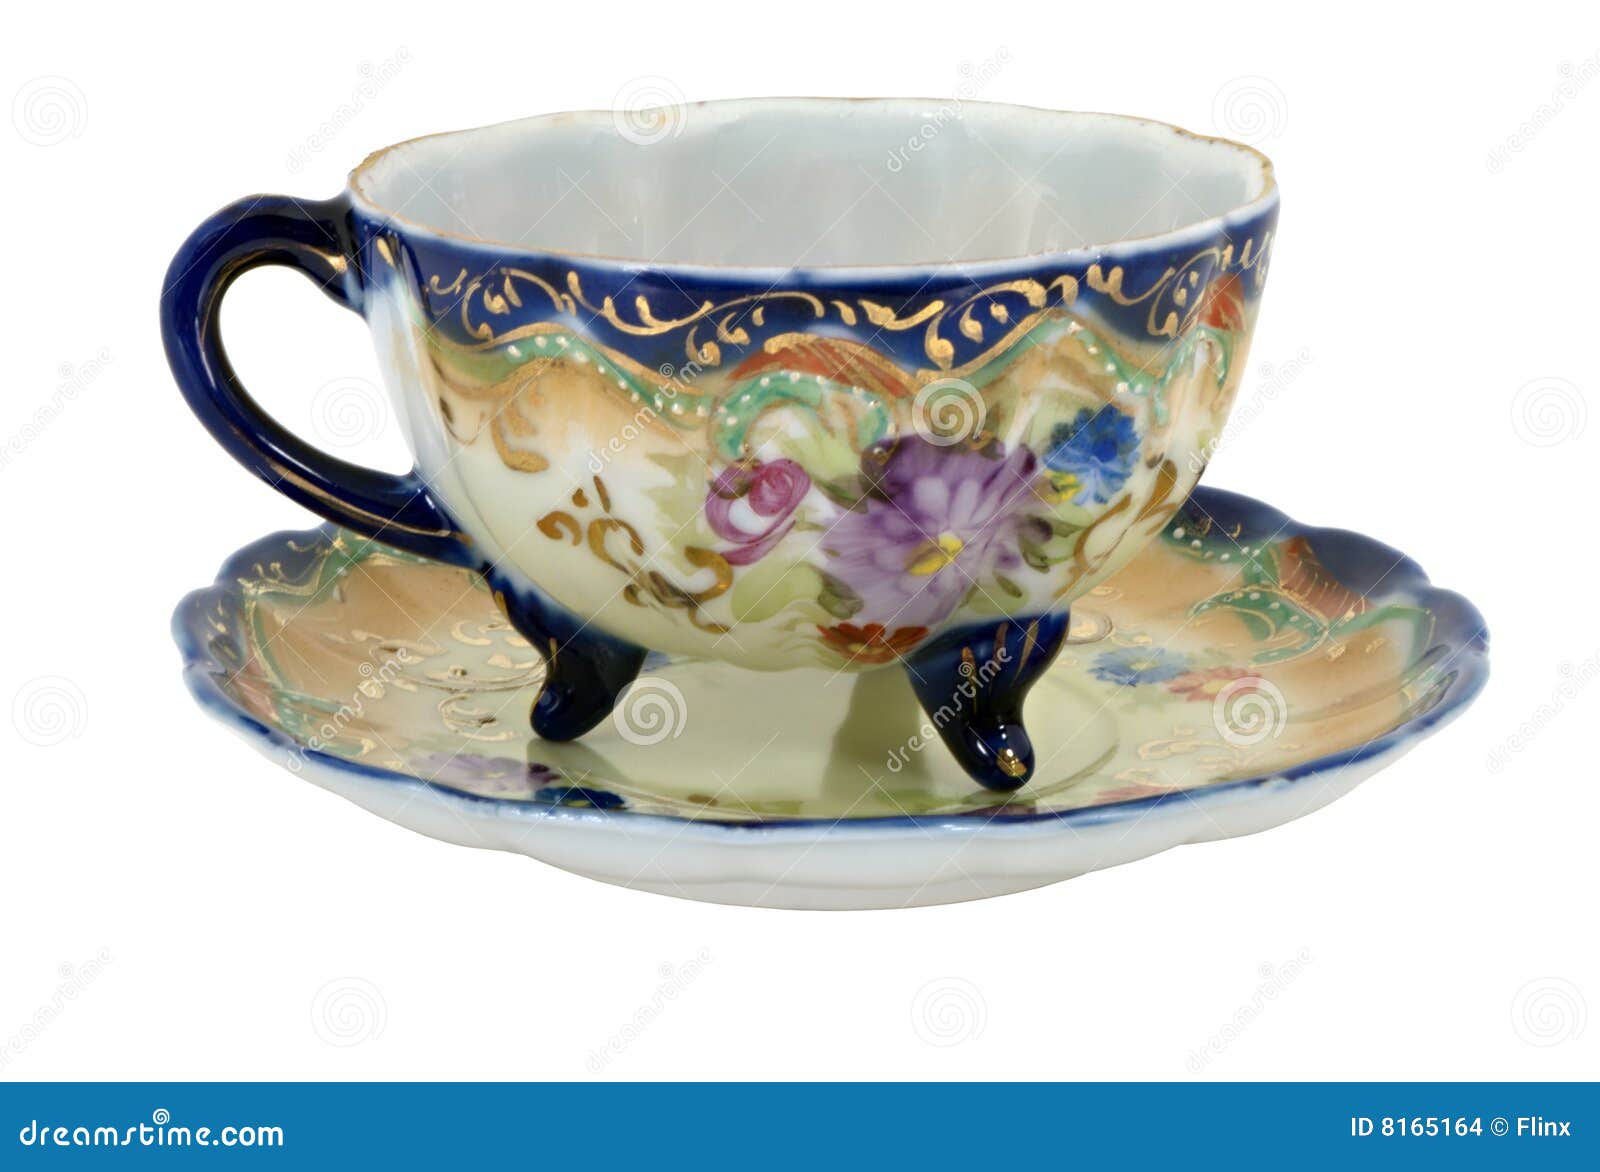 blue nippon hand painted teacup